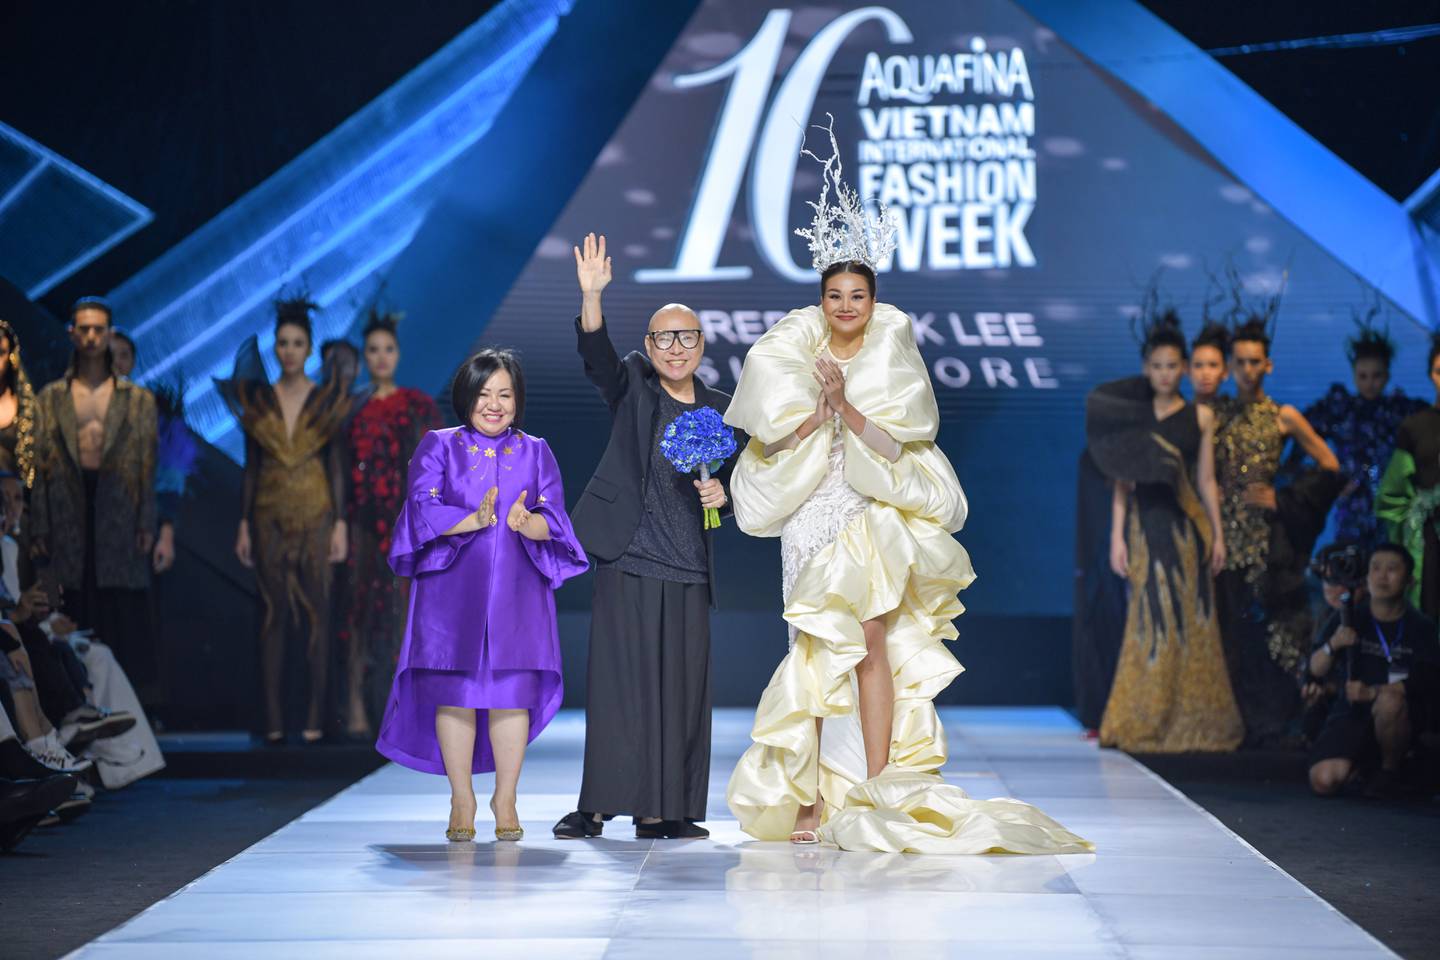 VIFW founder and CEO Trang Le (R) with Singaporean designer Frederick Lee and model Thanh Hang at Aquafina Vietnam International Fashion Week (VIFW) Fall/Winter 2019.